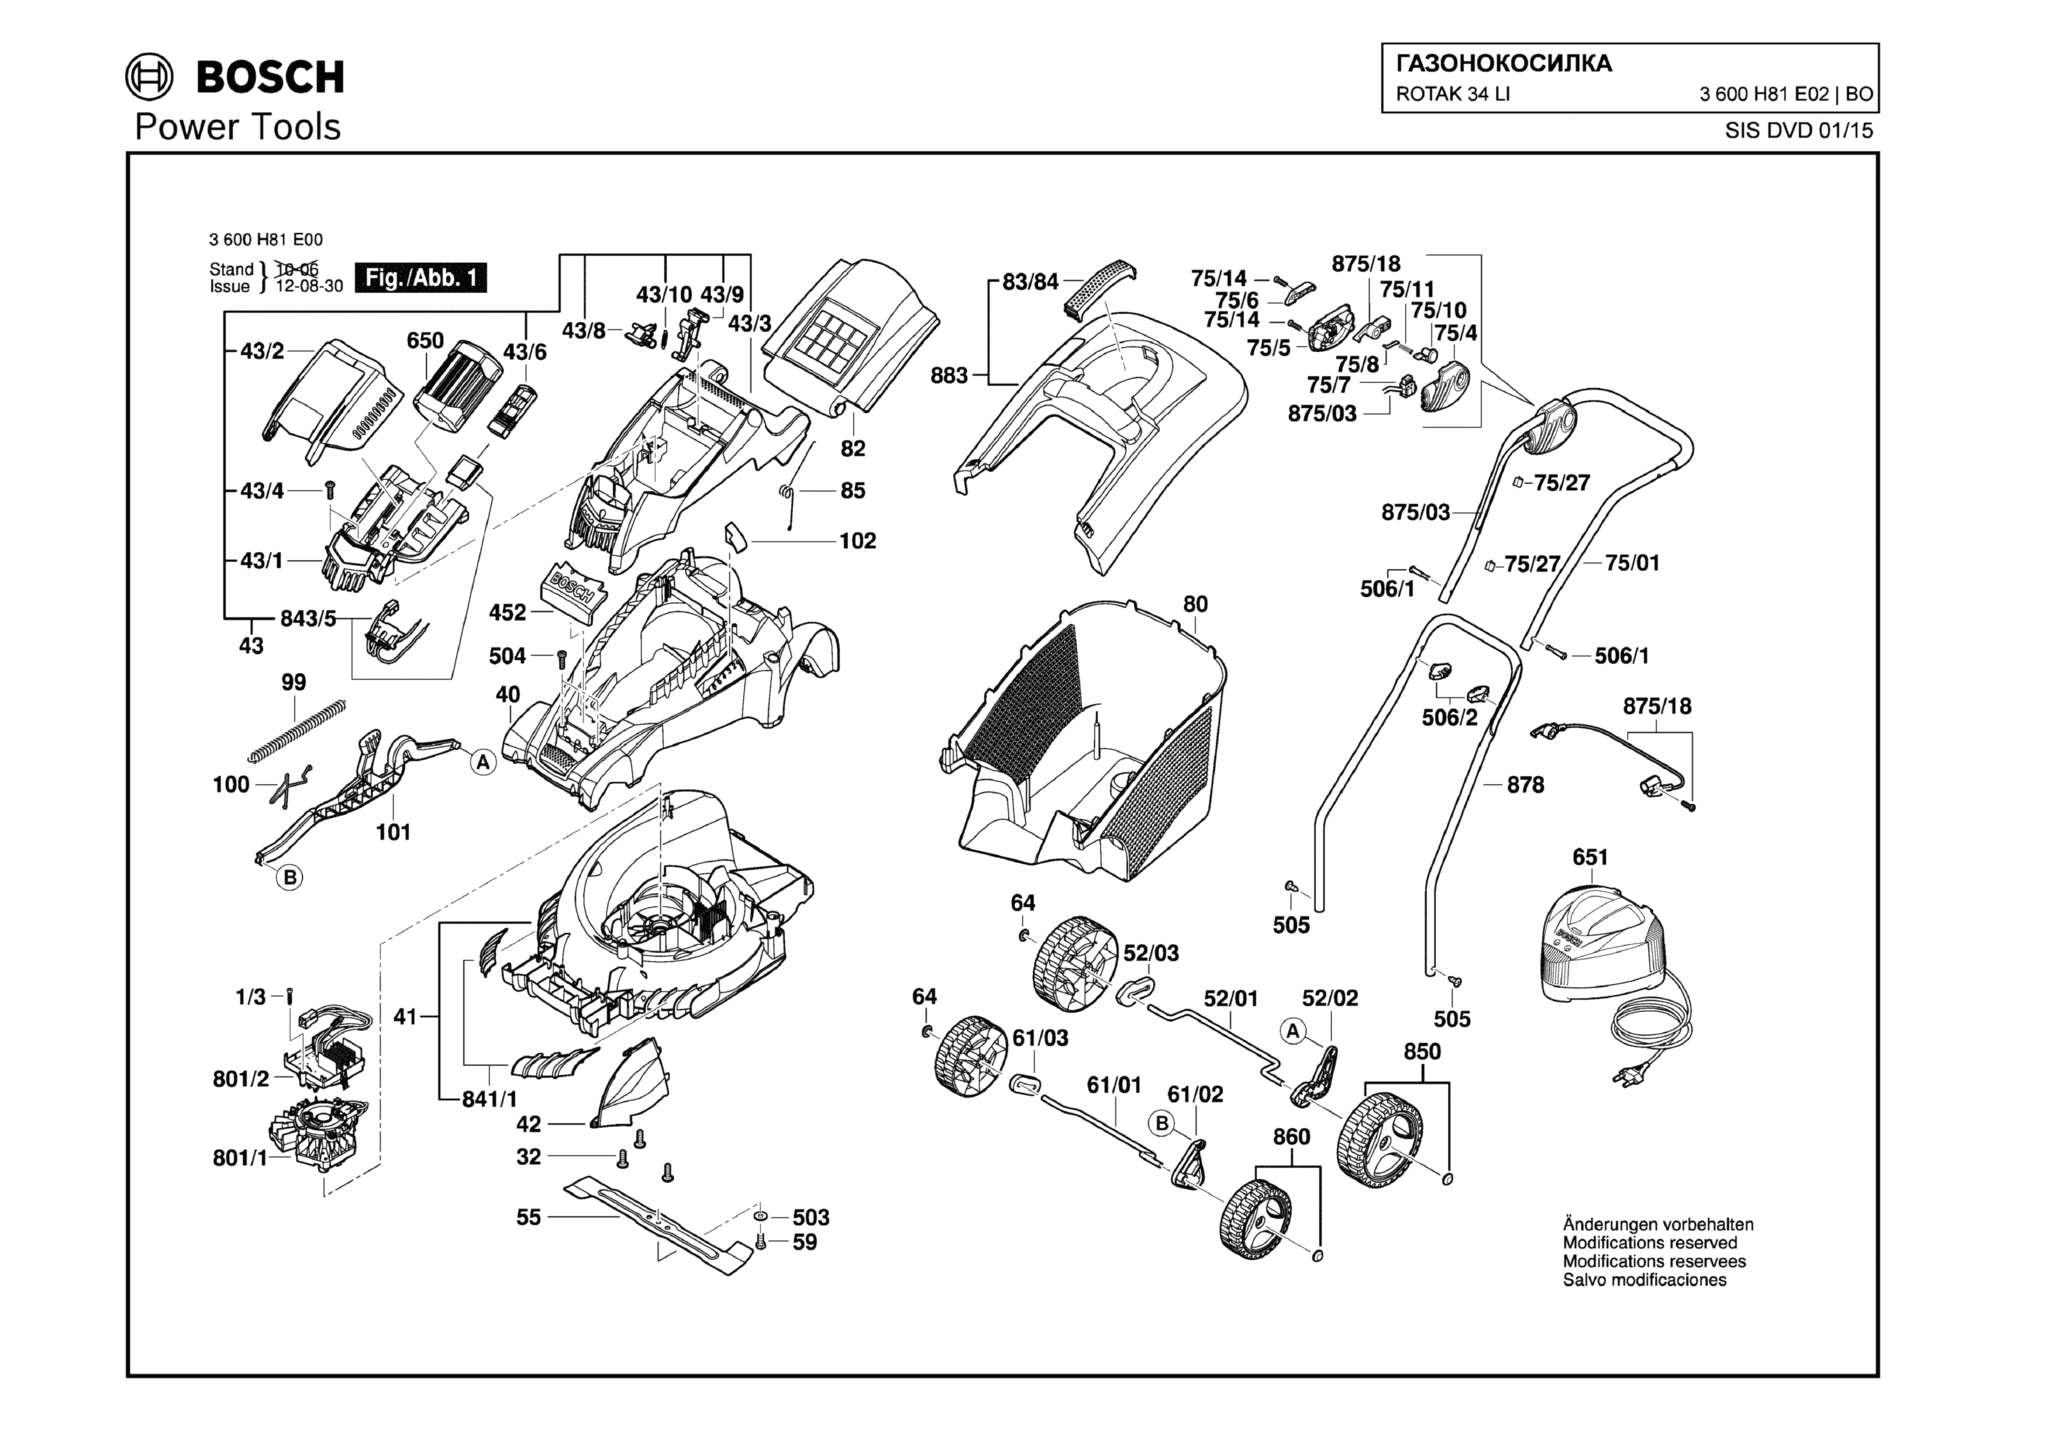 Запчасти, схема и деталировка Bosch ROTAK 34 LI (ТИП 3600H81E02)